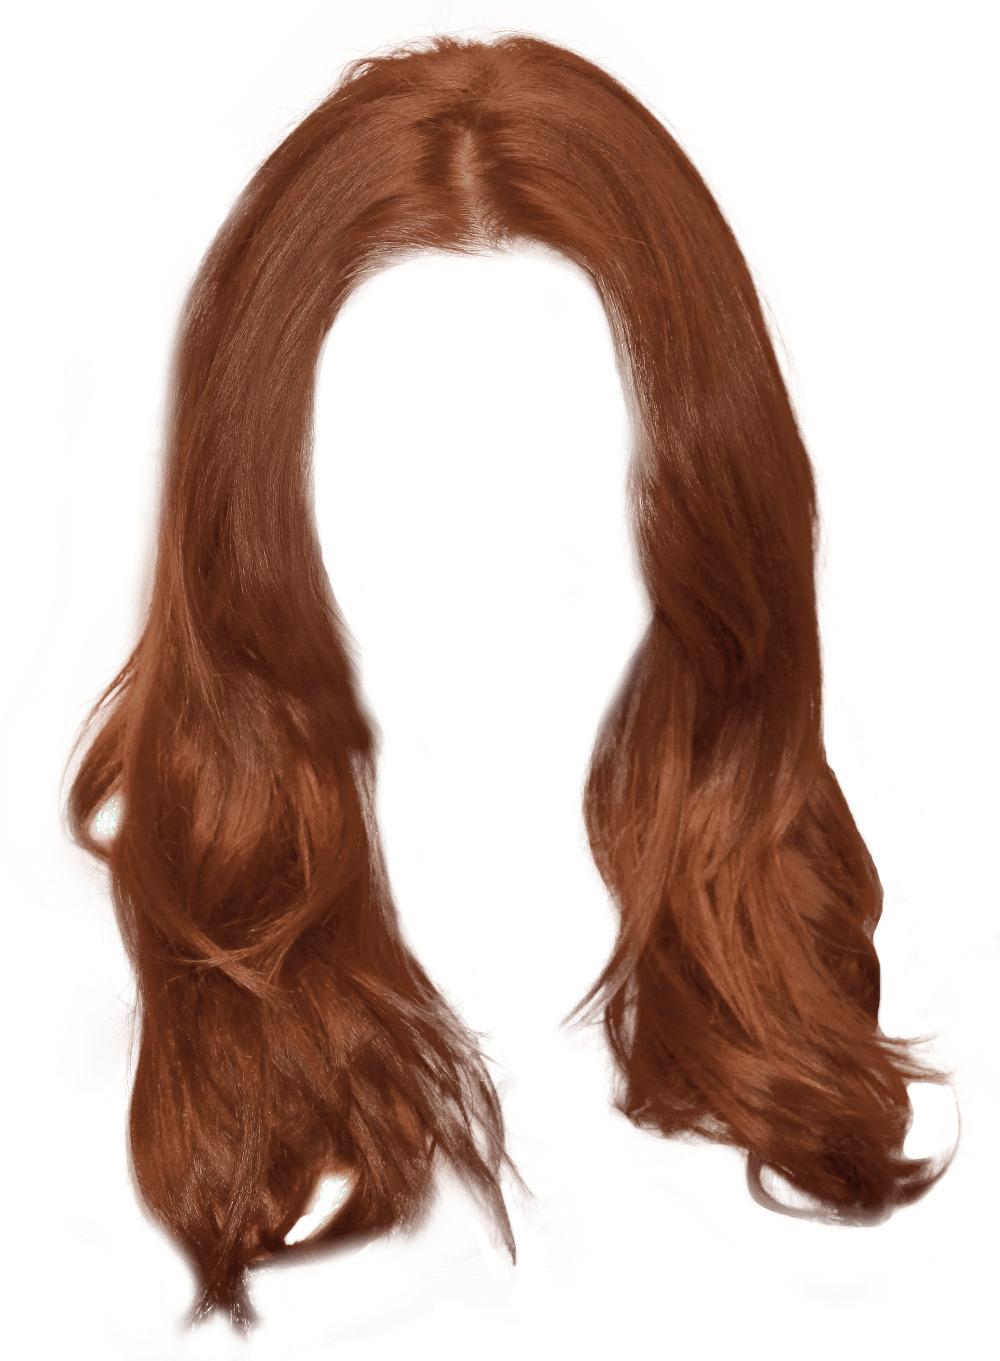 Ginger Long Women Hair png transparent